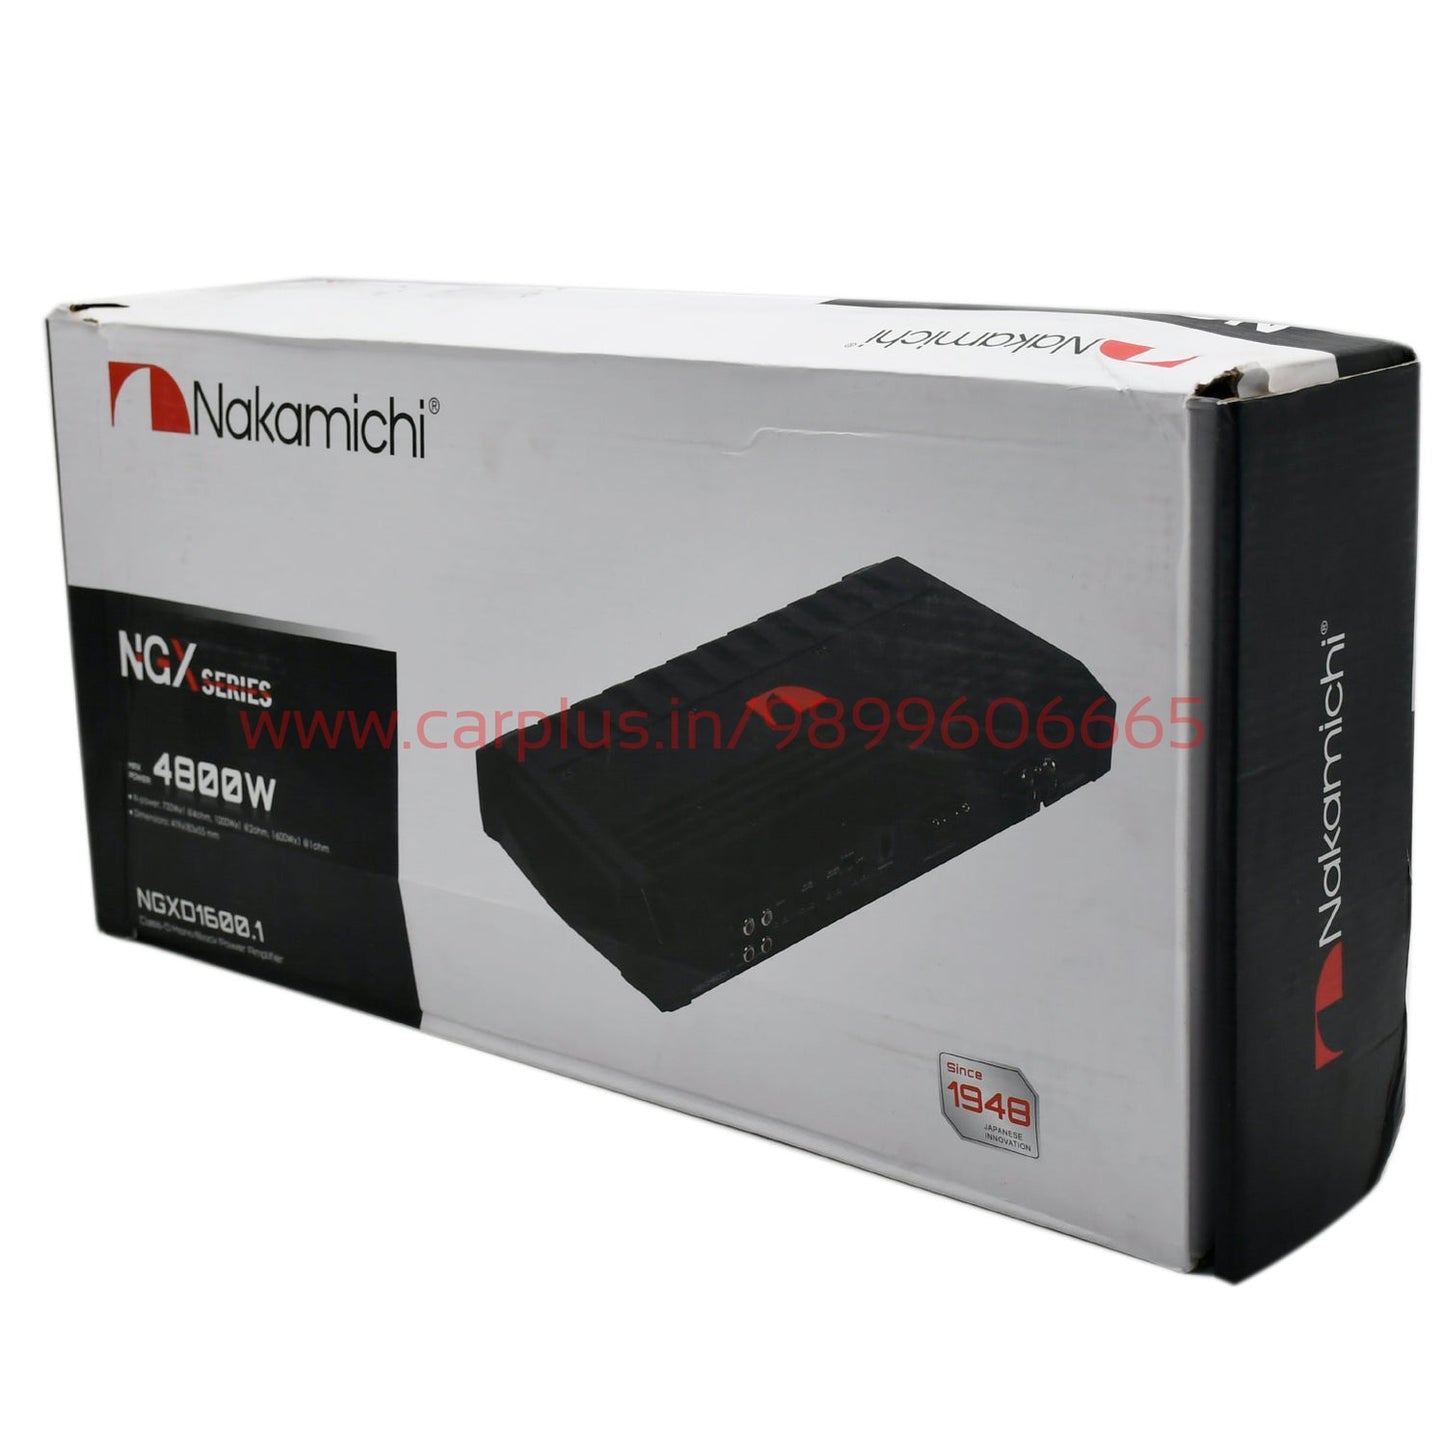 
                  
                    NAKAMICHI NGXD1600.1 Digital Mono-Block Class-D Amplifier-MONO AMPLIFIER-NAKAMICHI-CARPLUS
                  
                